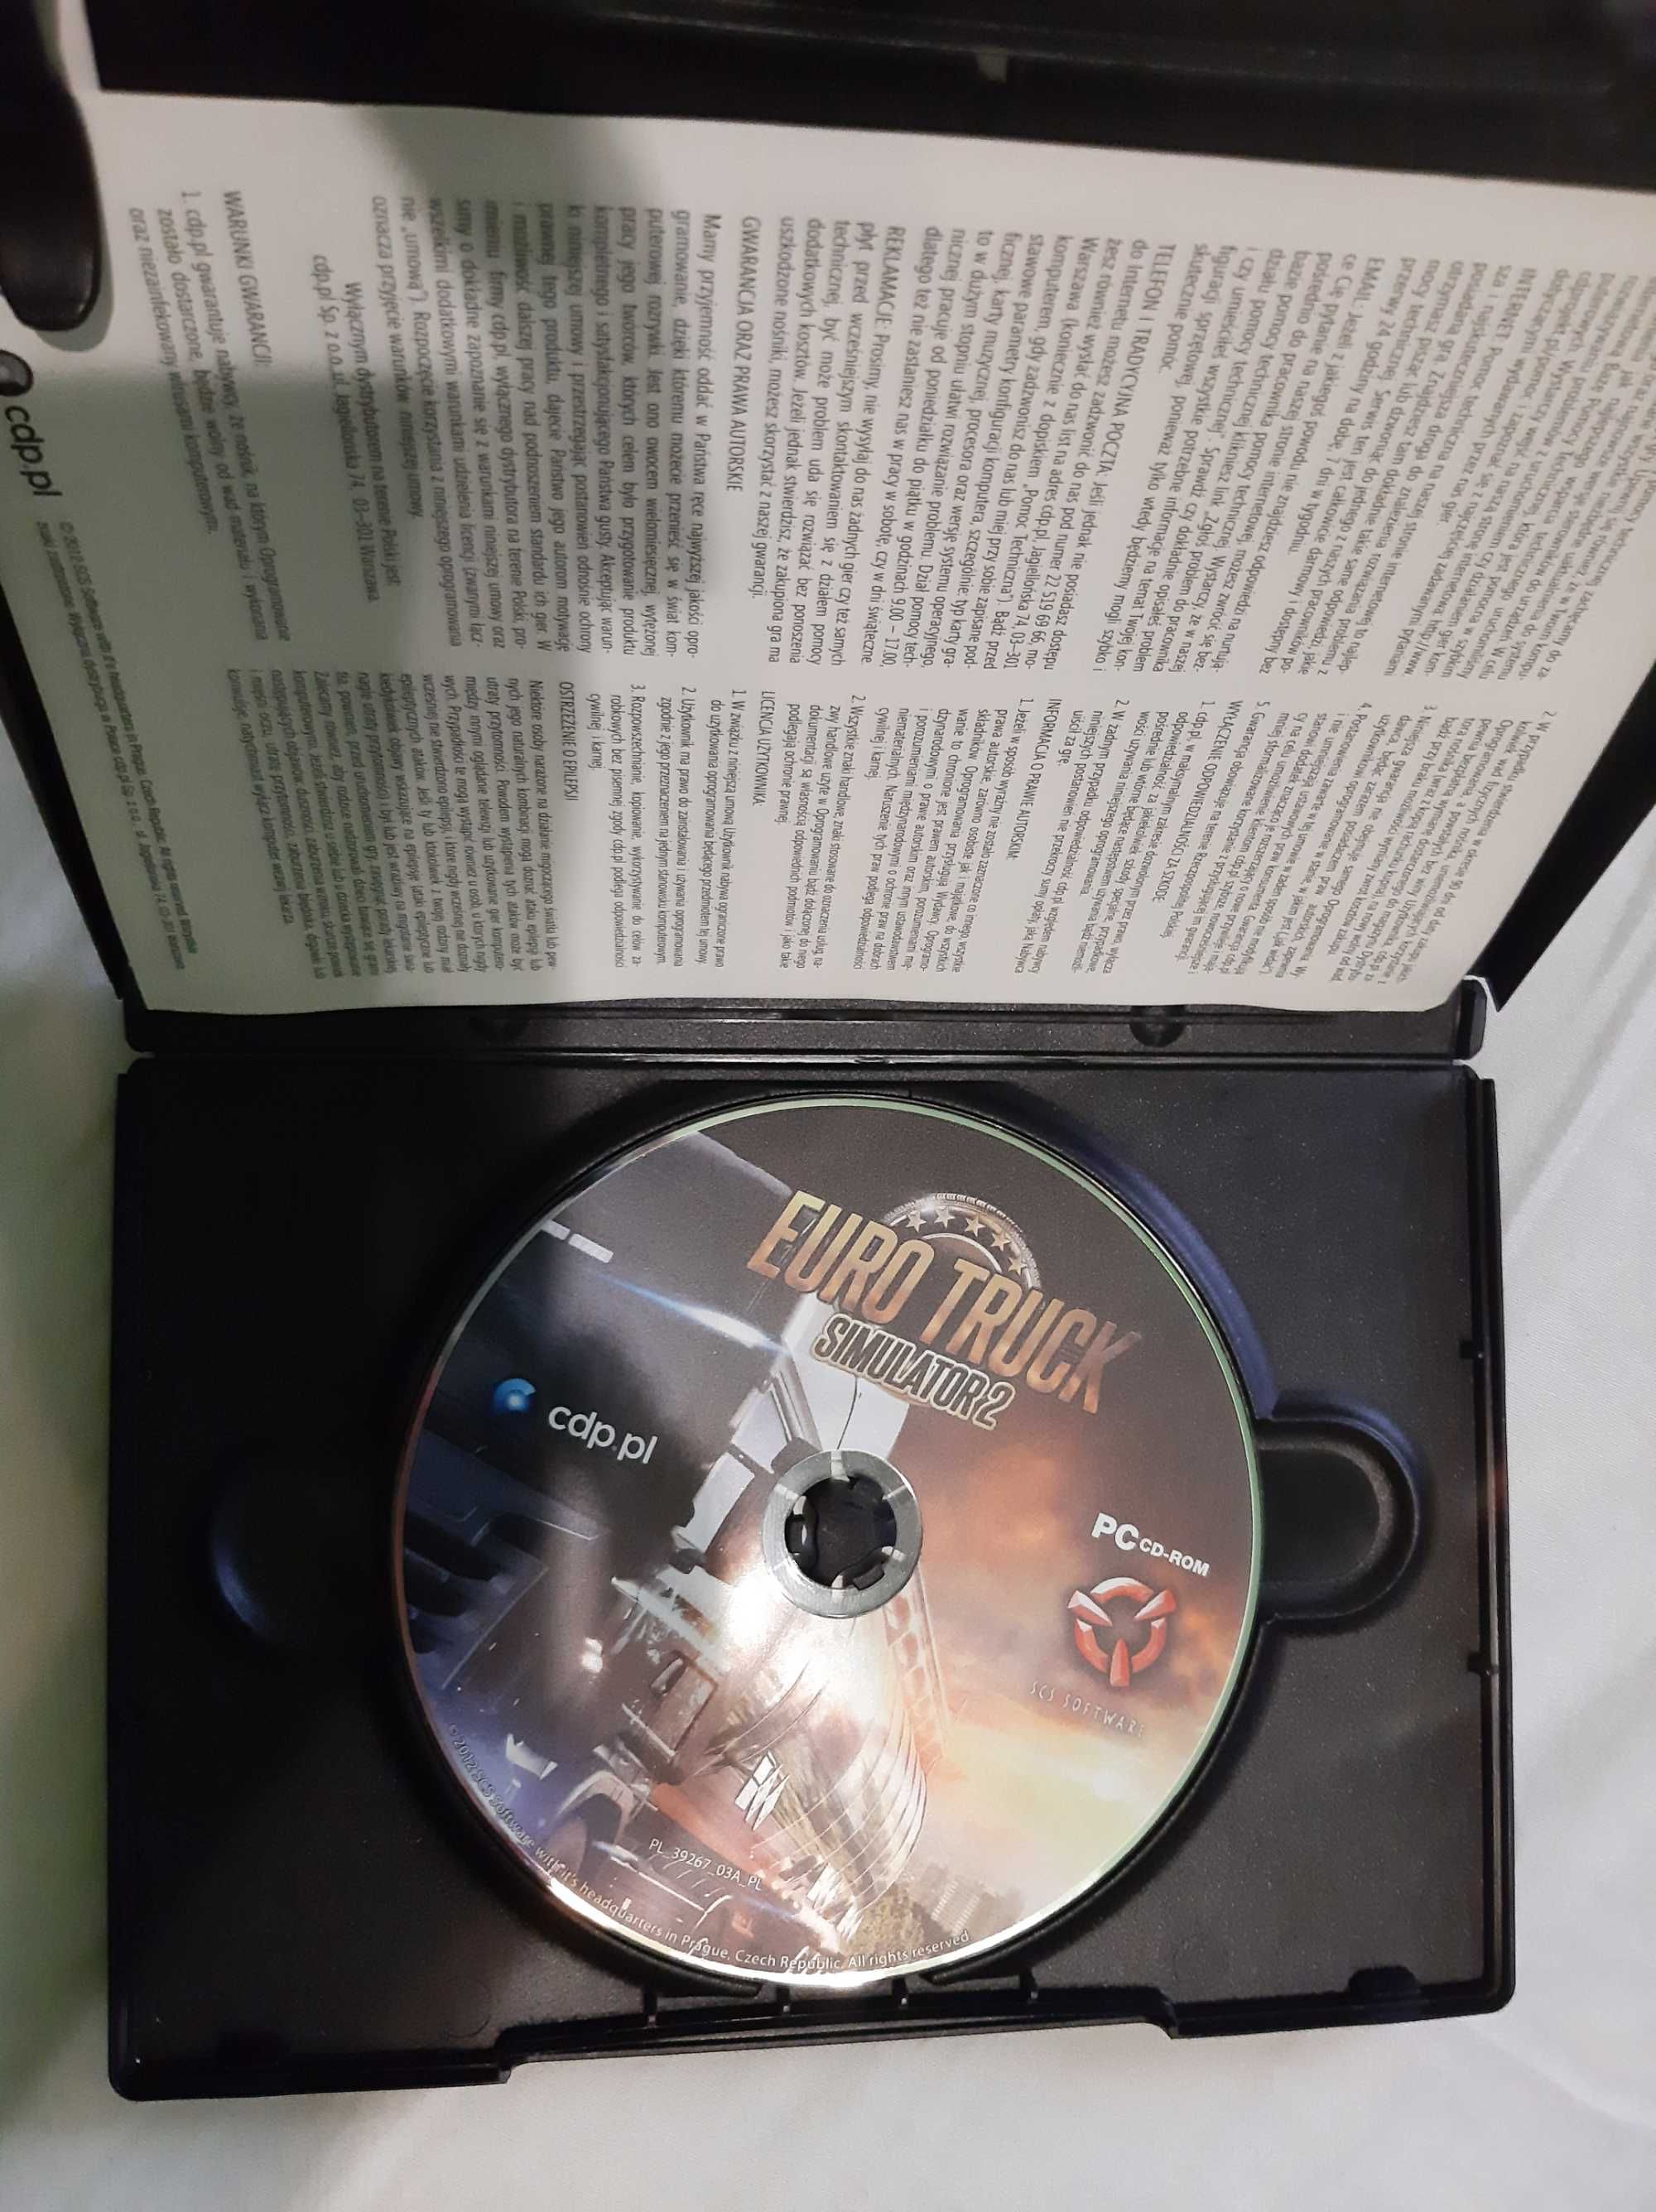 Gra Euro Truck Simulator 2 Płyta DVD/CD PC